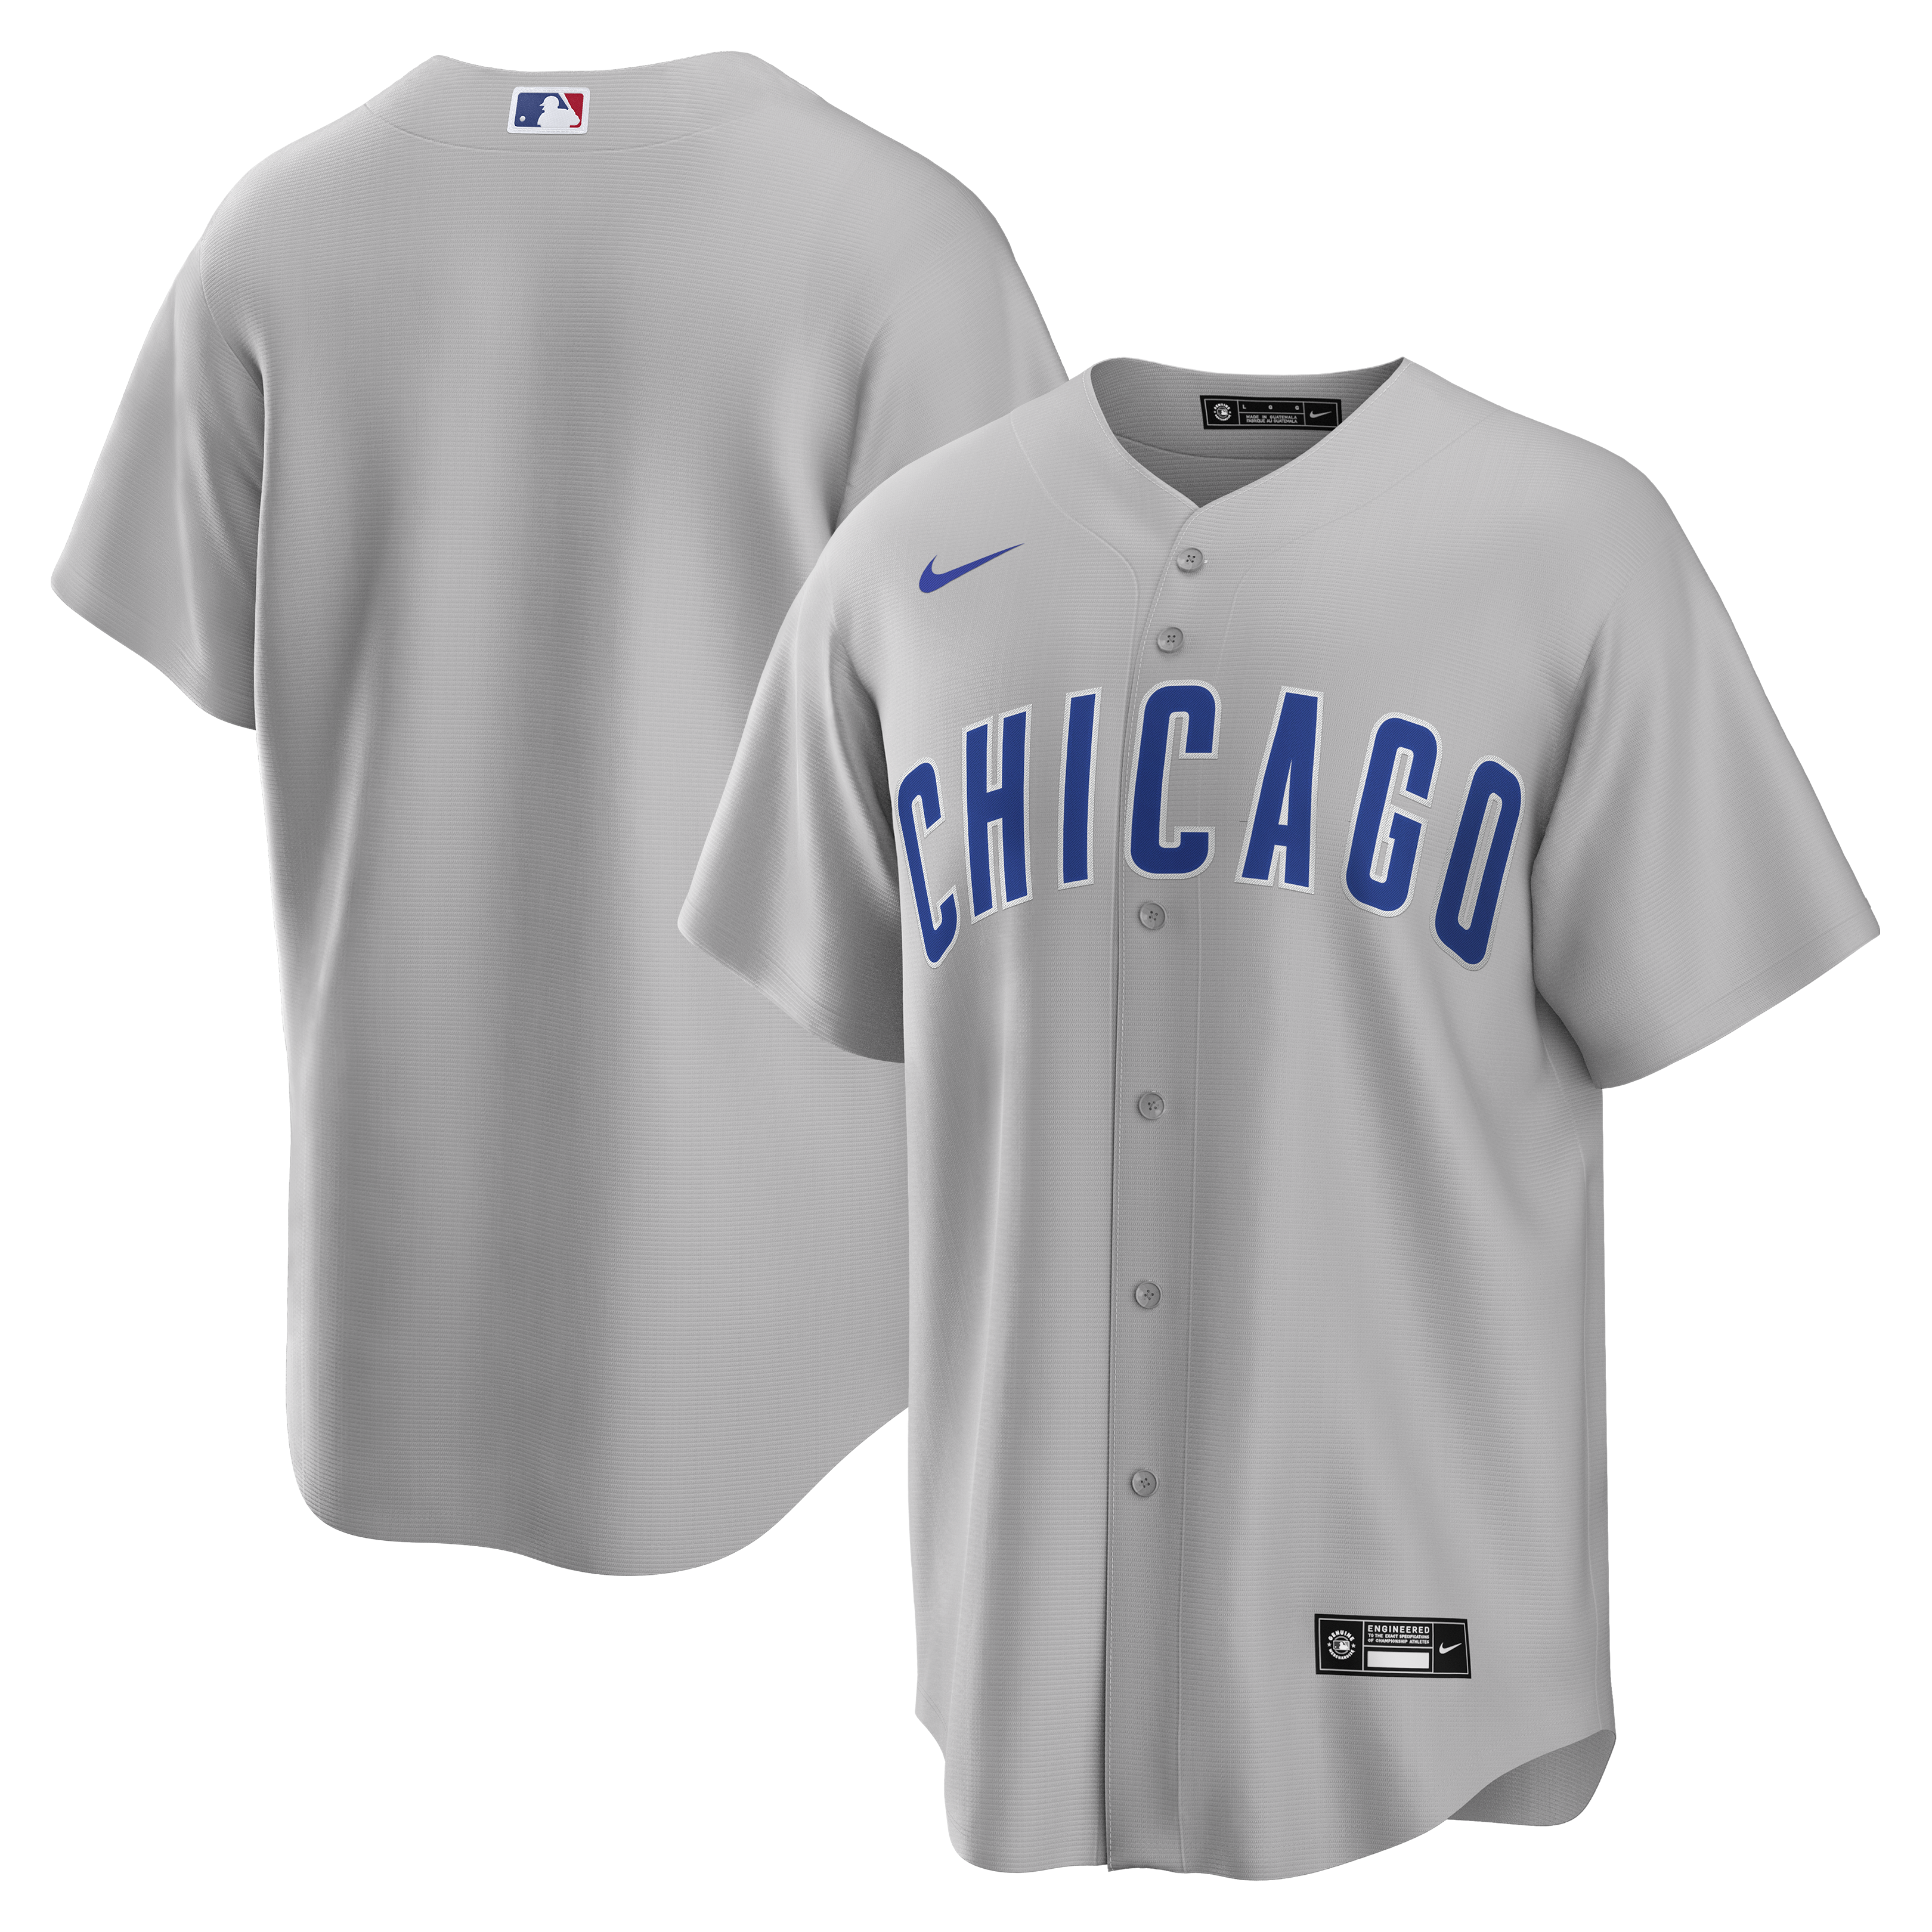 Majestic Chicago Cubs Big C Tee 3X Black/White/Multi